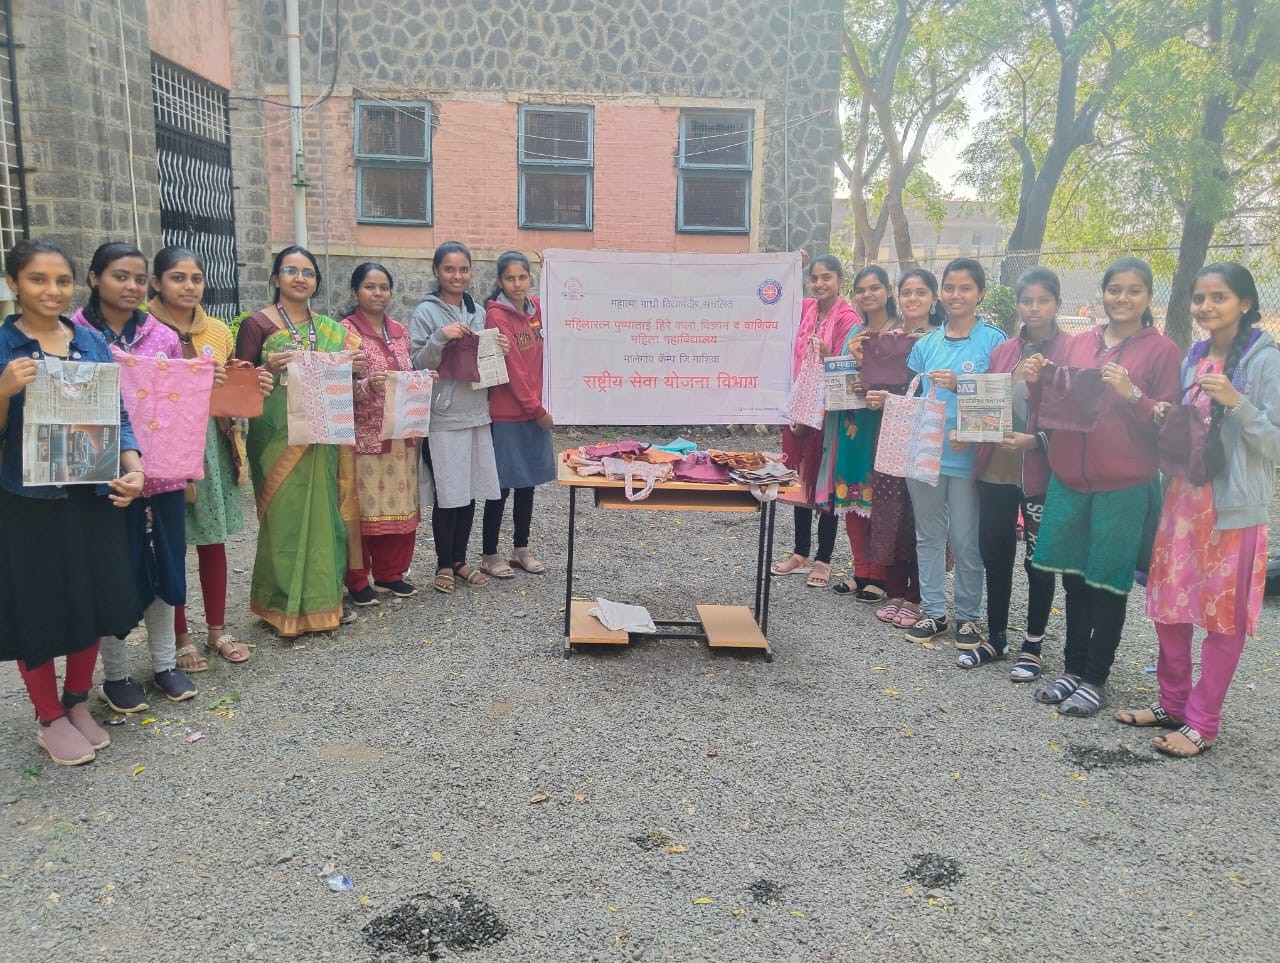 NSS volunteer conducted Plastic free campaign. Volunteer prepared cloth bags &
distributed to fruit sellers.